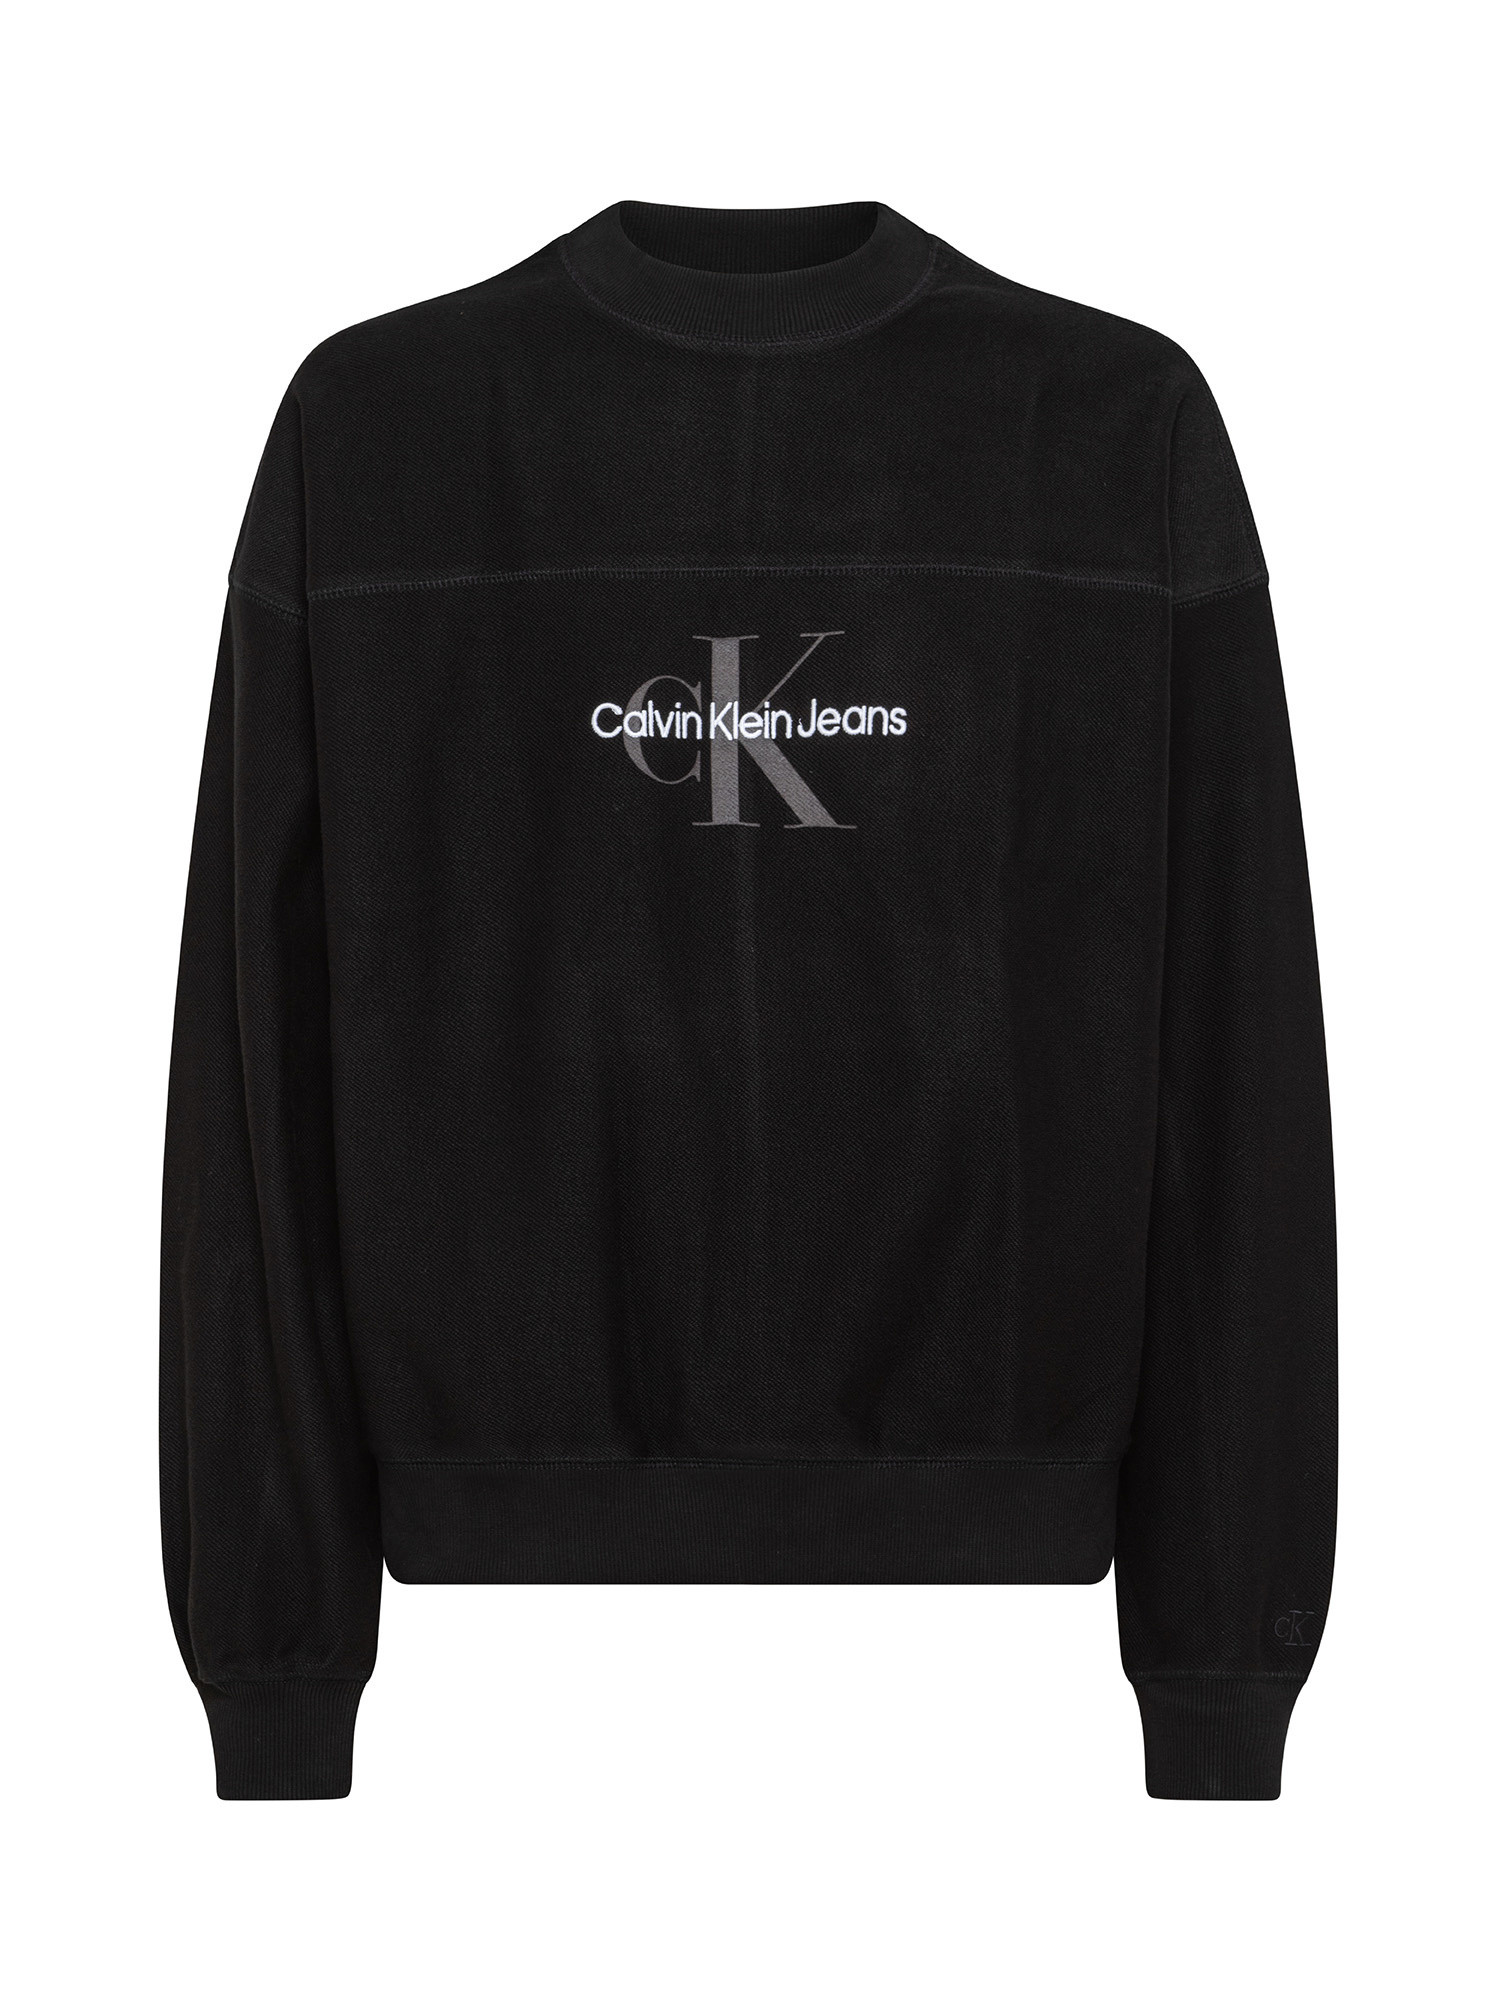 Cotton crewneck sweatshirt with logo, Black, large image number 0